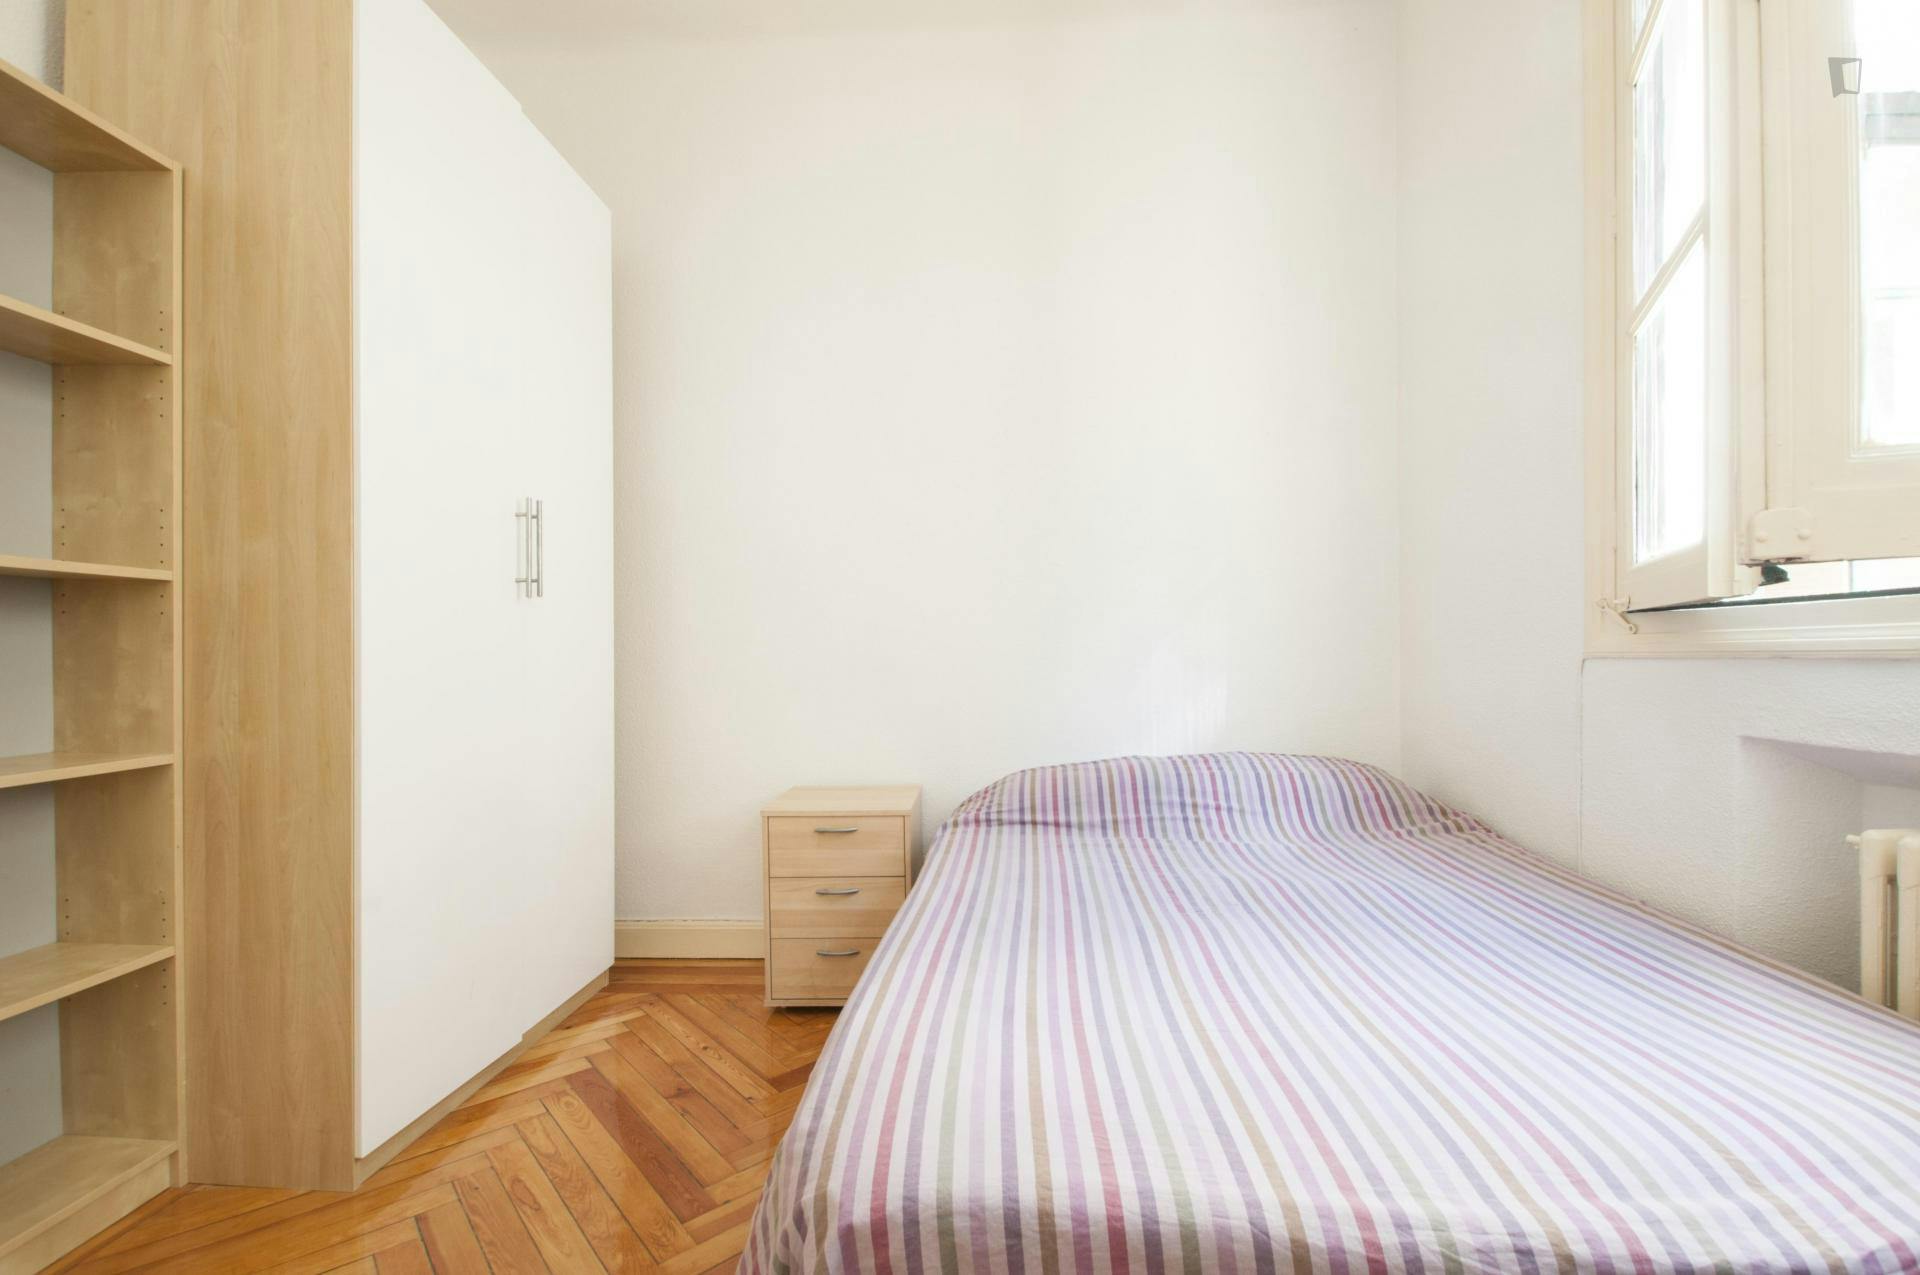 Homely single bedroom in Malasaña